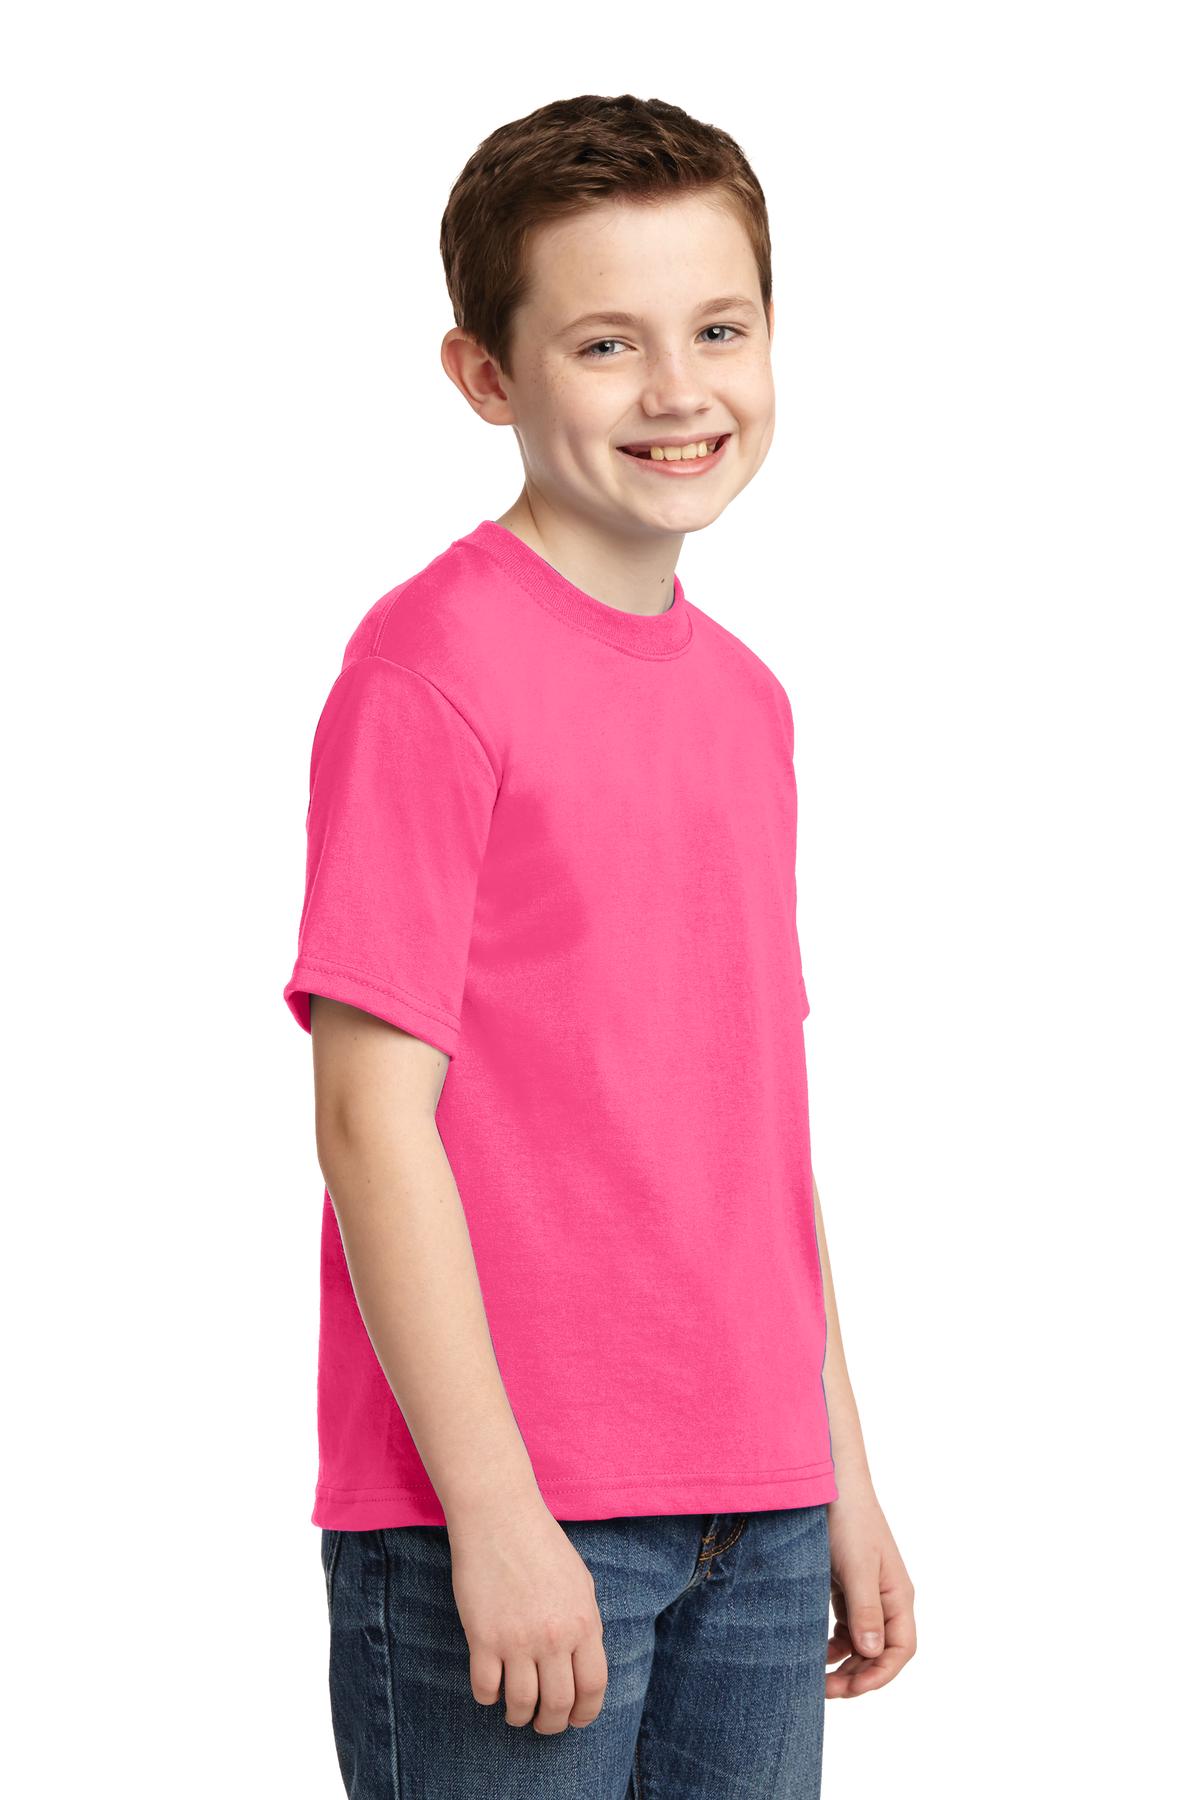 Jerzees - Youth Dri-Power 50/50 Cotton/Poly T-Shirt. 29B - Neon Pink